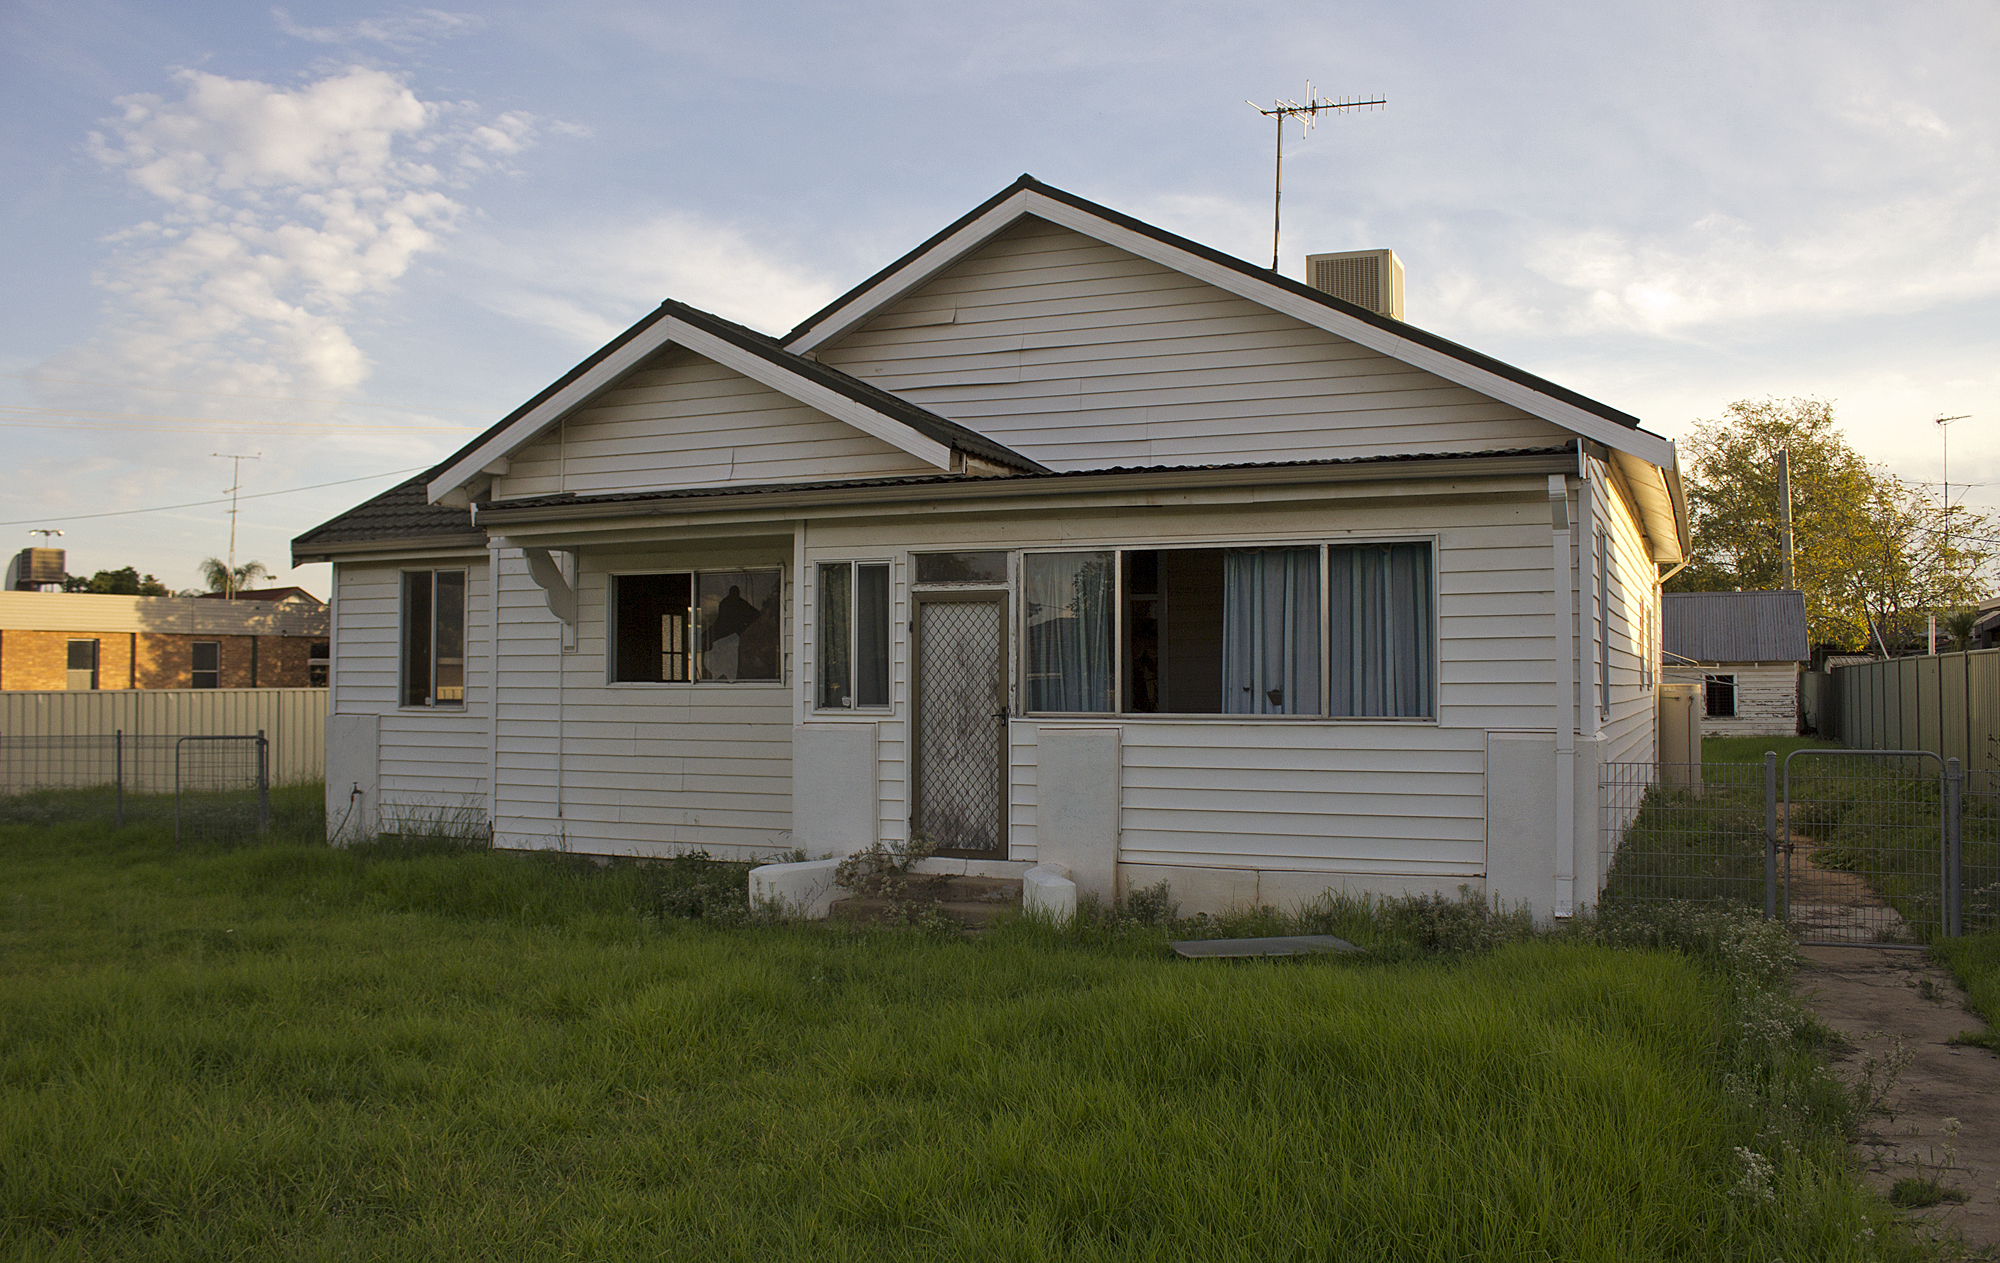 File:Abandoned house in Leeton.jpg - Wikimedia Commons